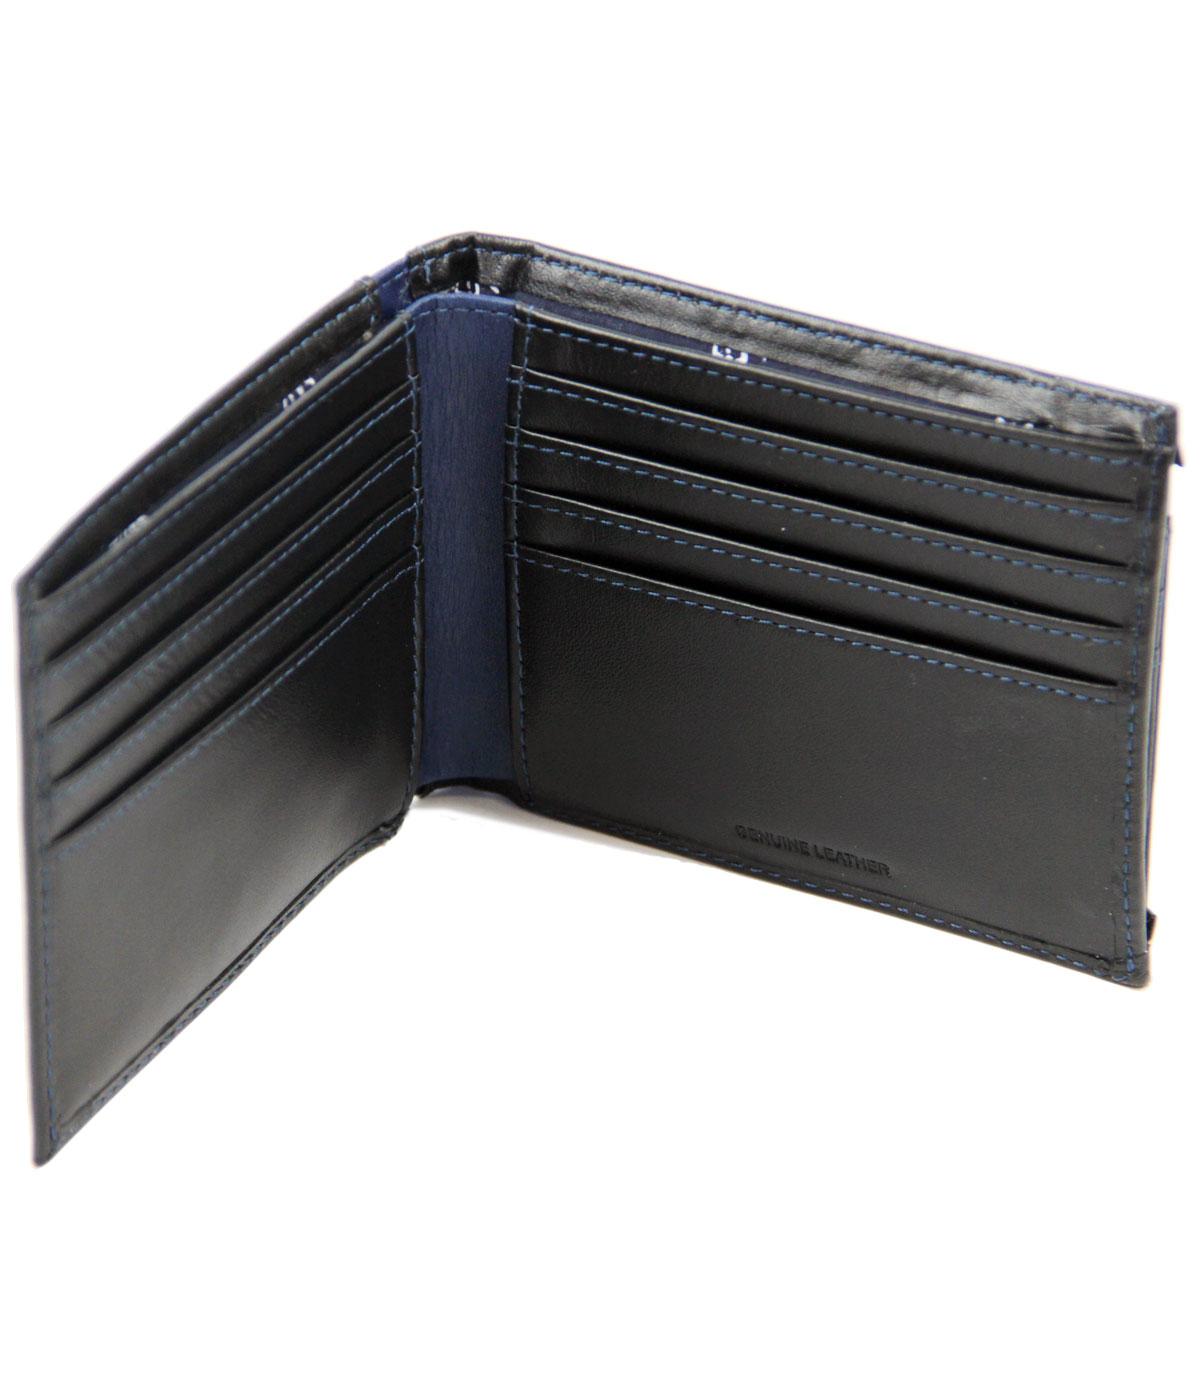 ORIGINAL PENGUIN Retro Mod Card Insert Wallet in Black